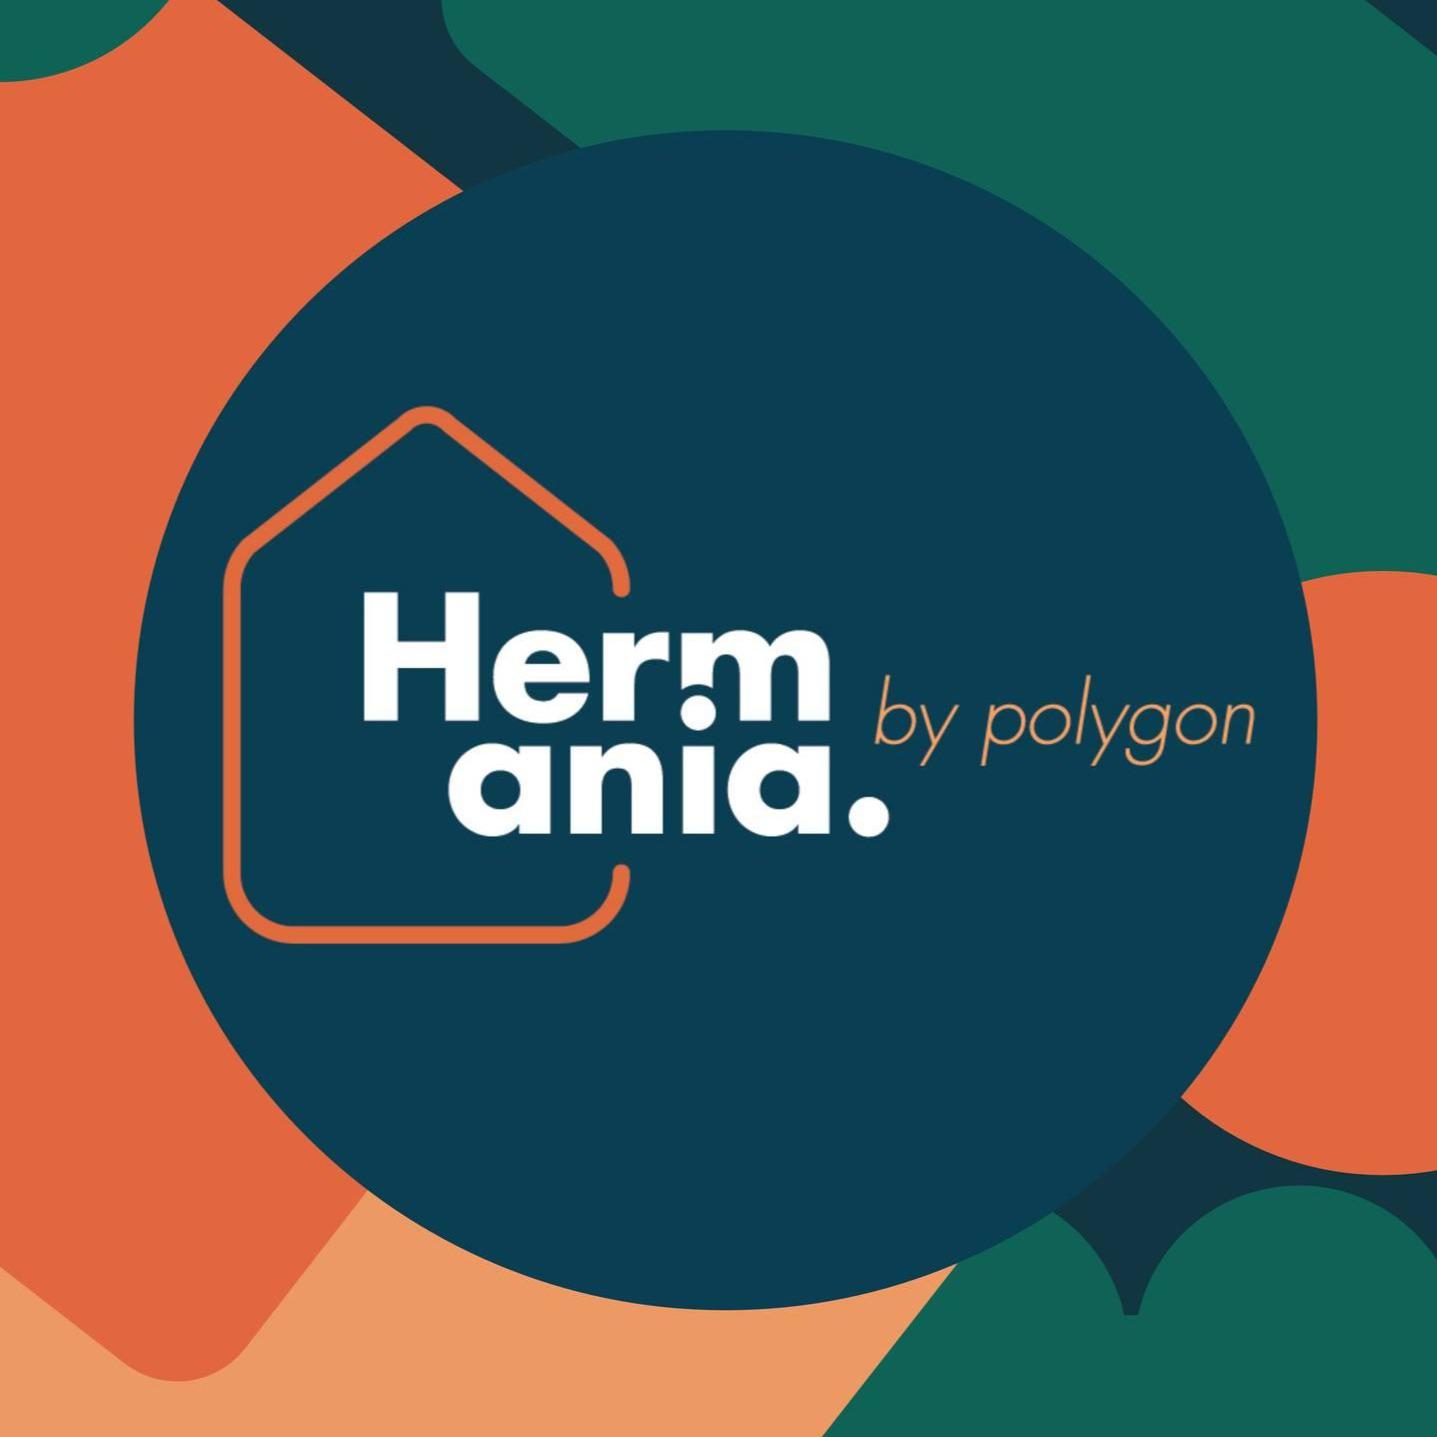 Hermania by polygon Logo